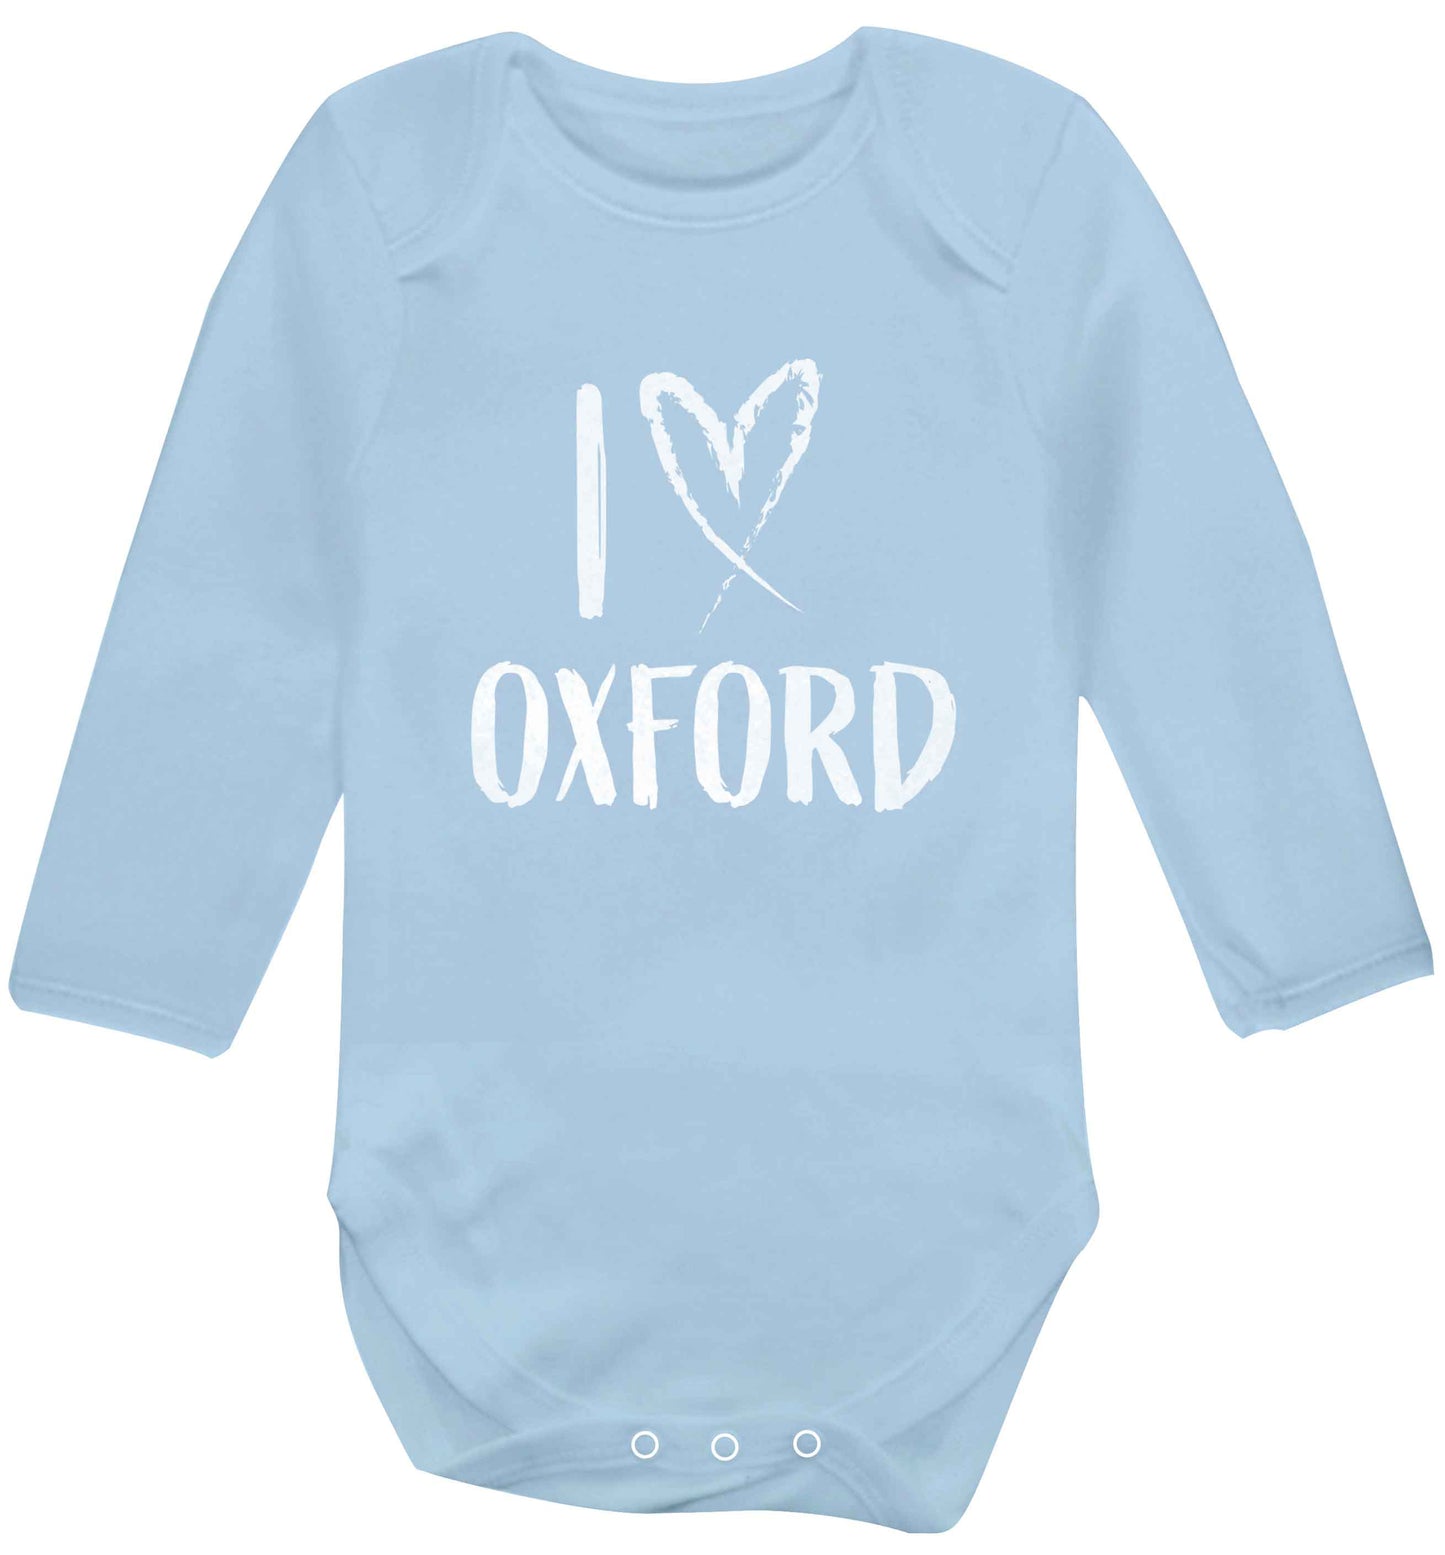 I love Oxford baby vest long sleeved pale blue 6-12 months